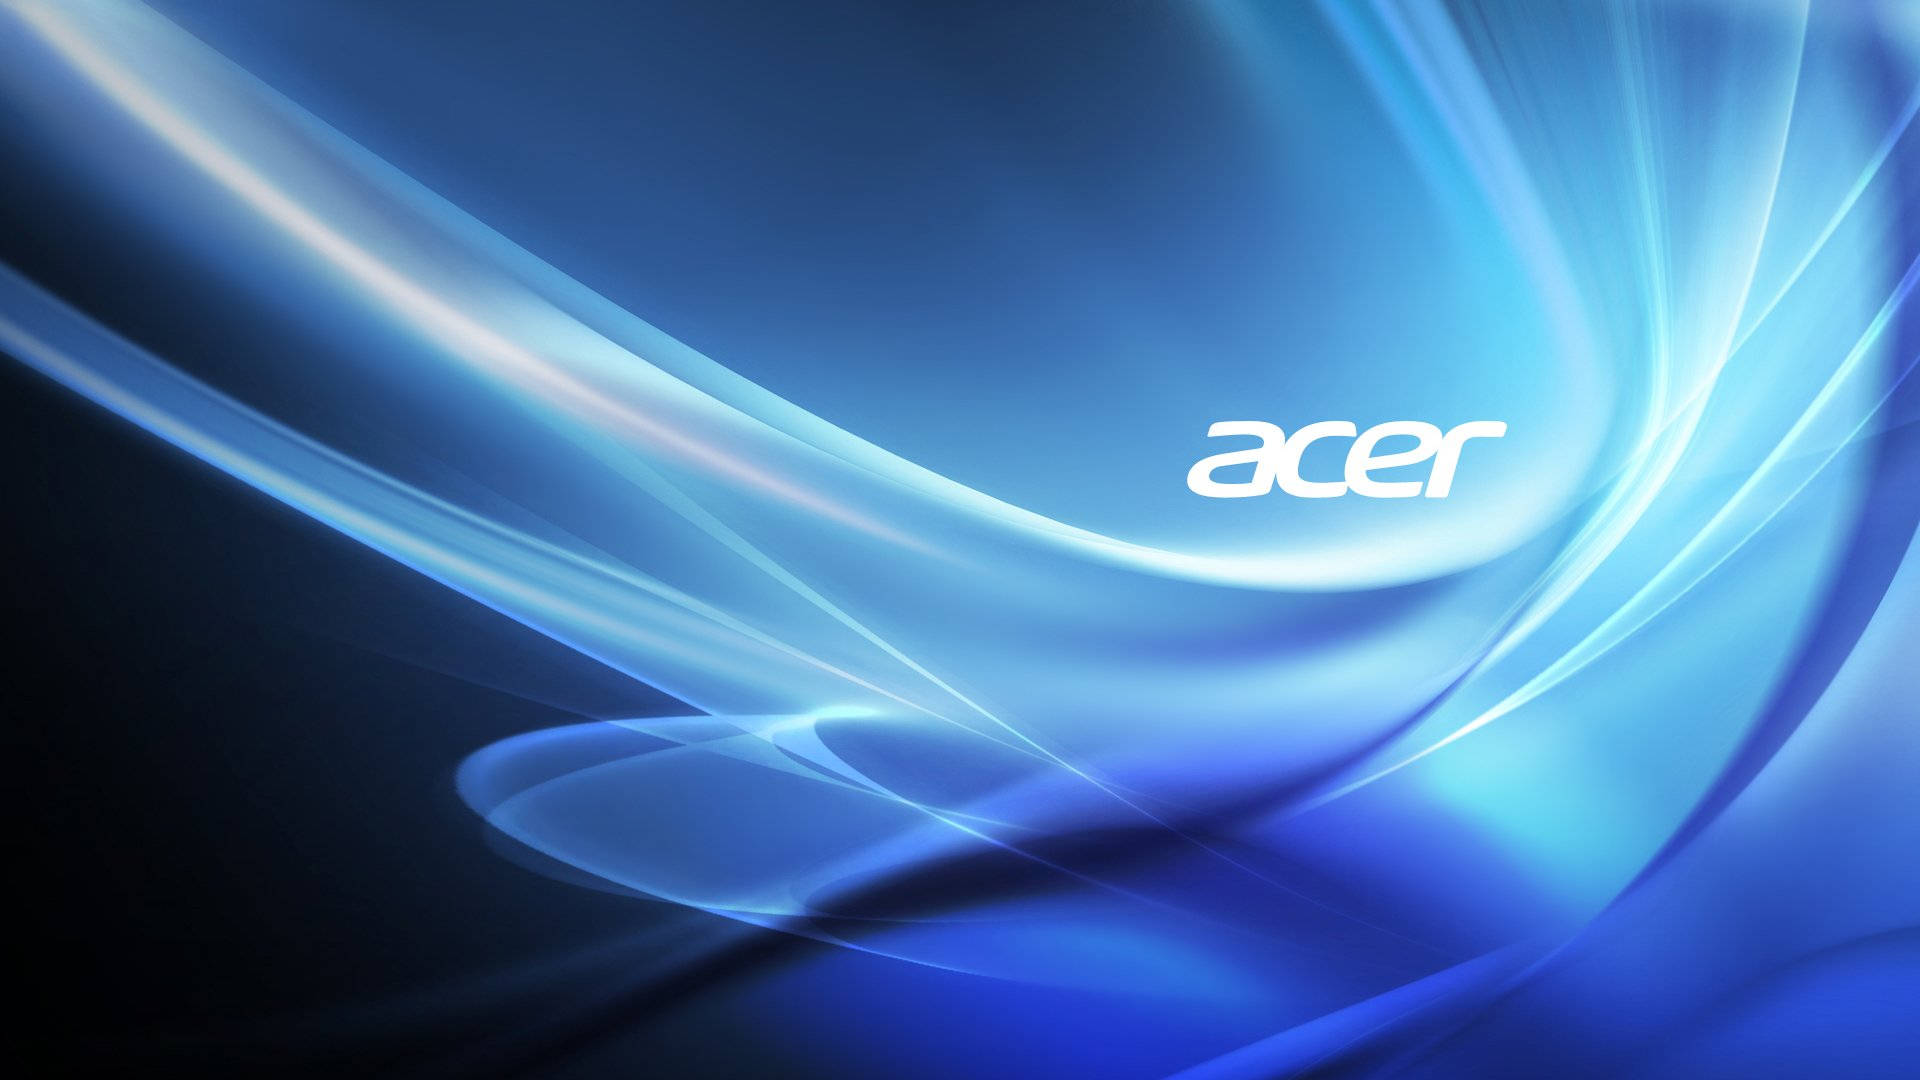 Acer Blue Aesthetic Themed Logo Background